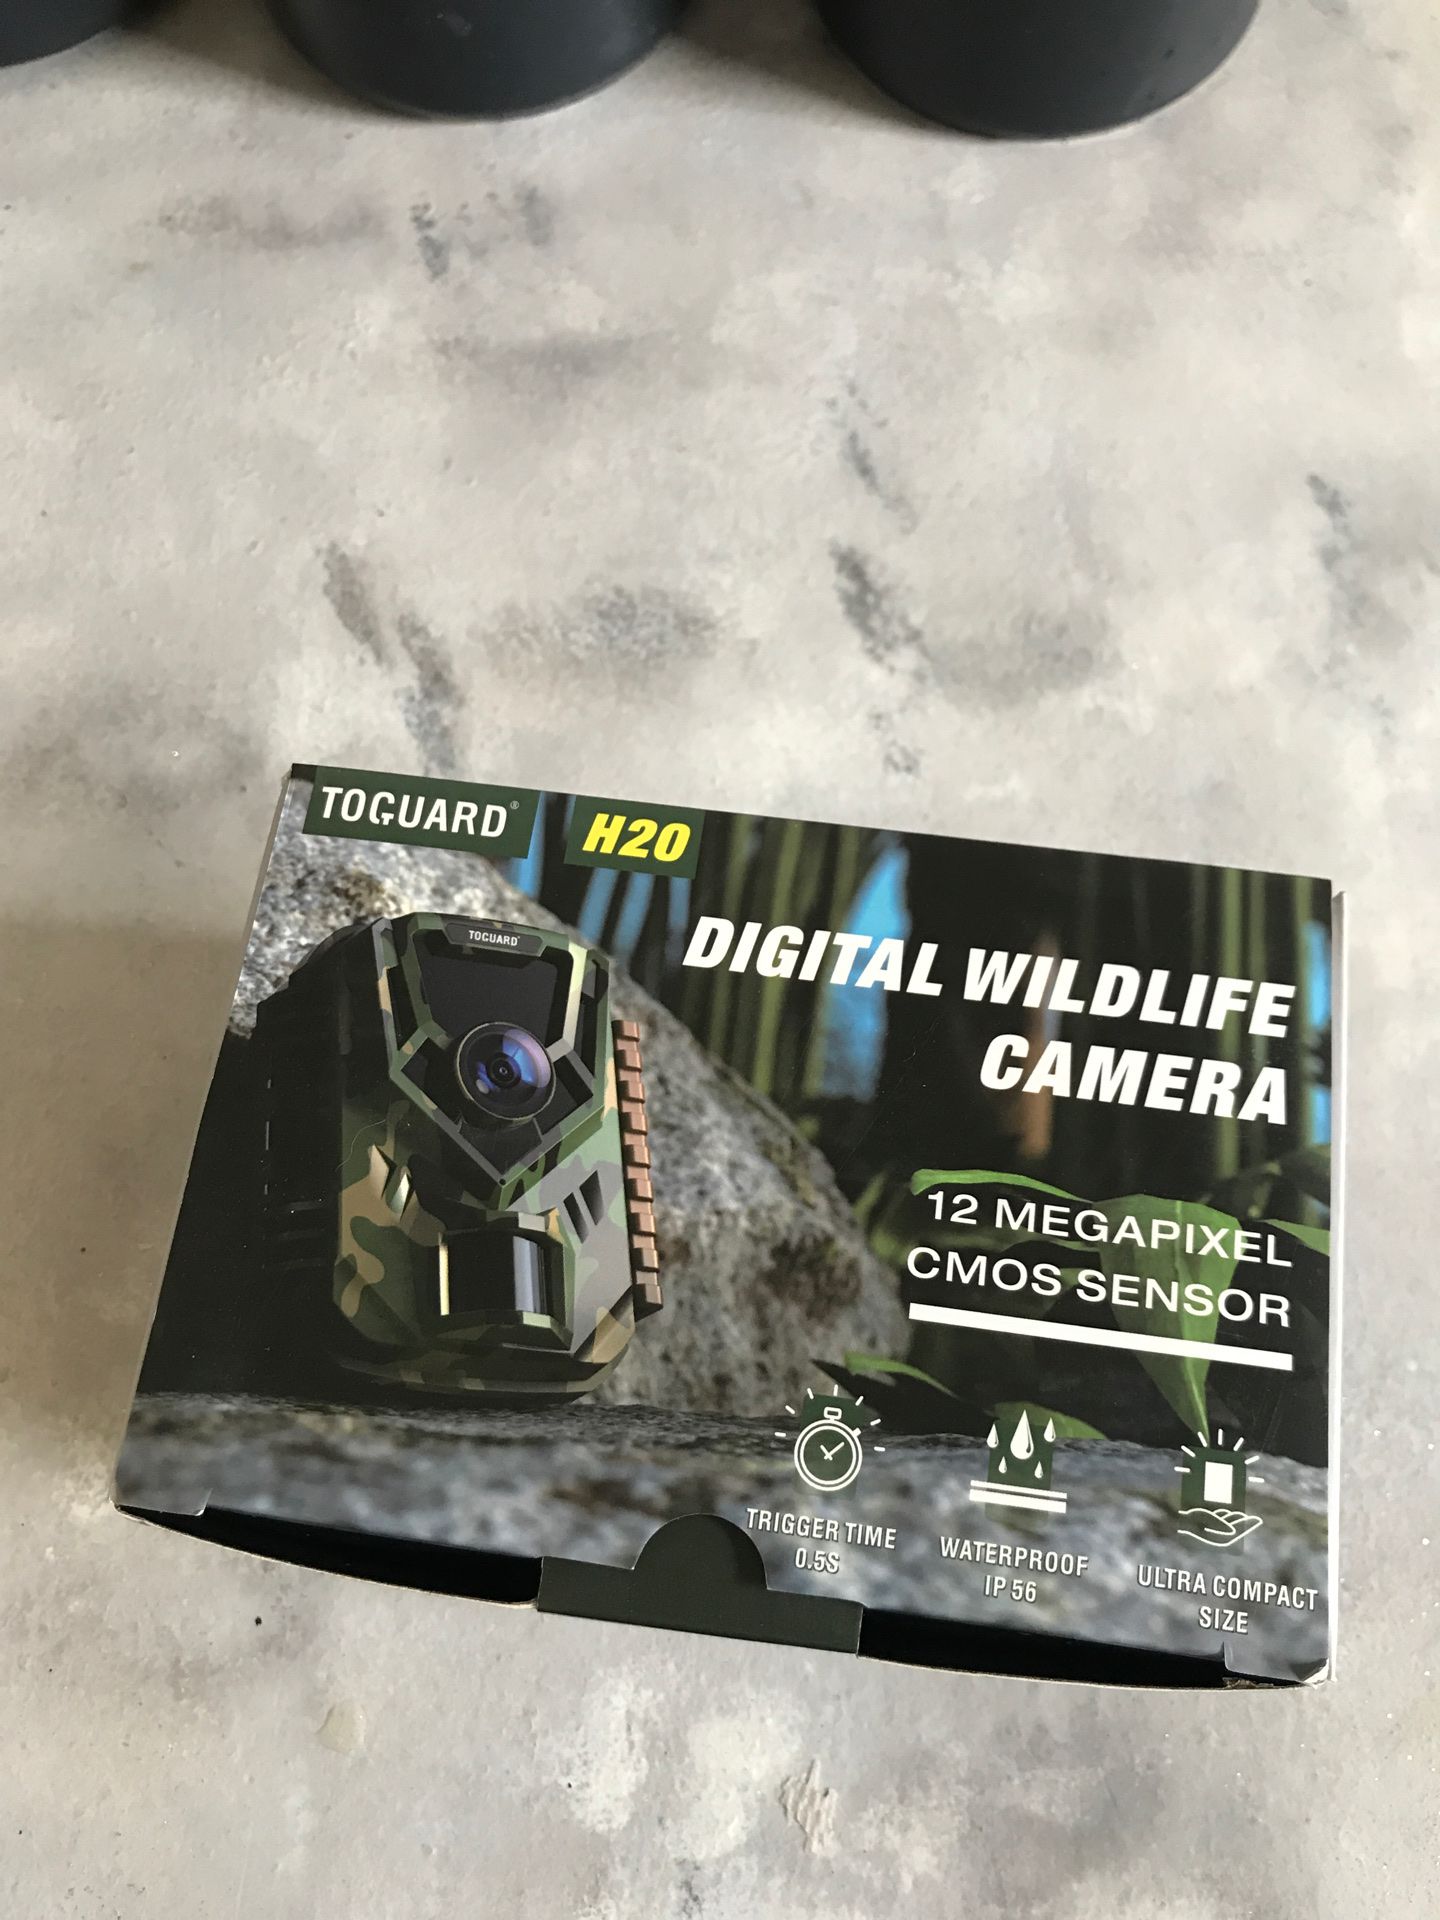 Digital Trail Camera